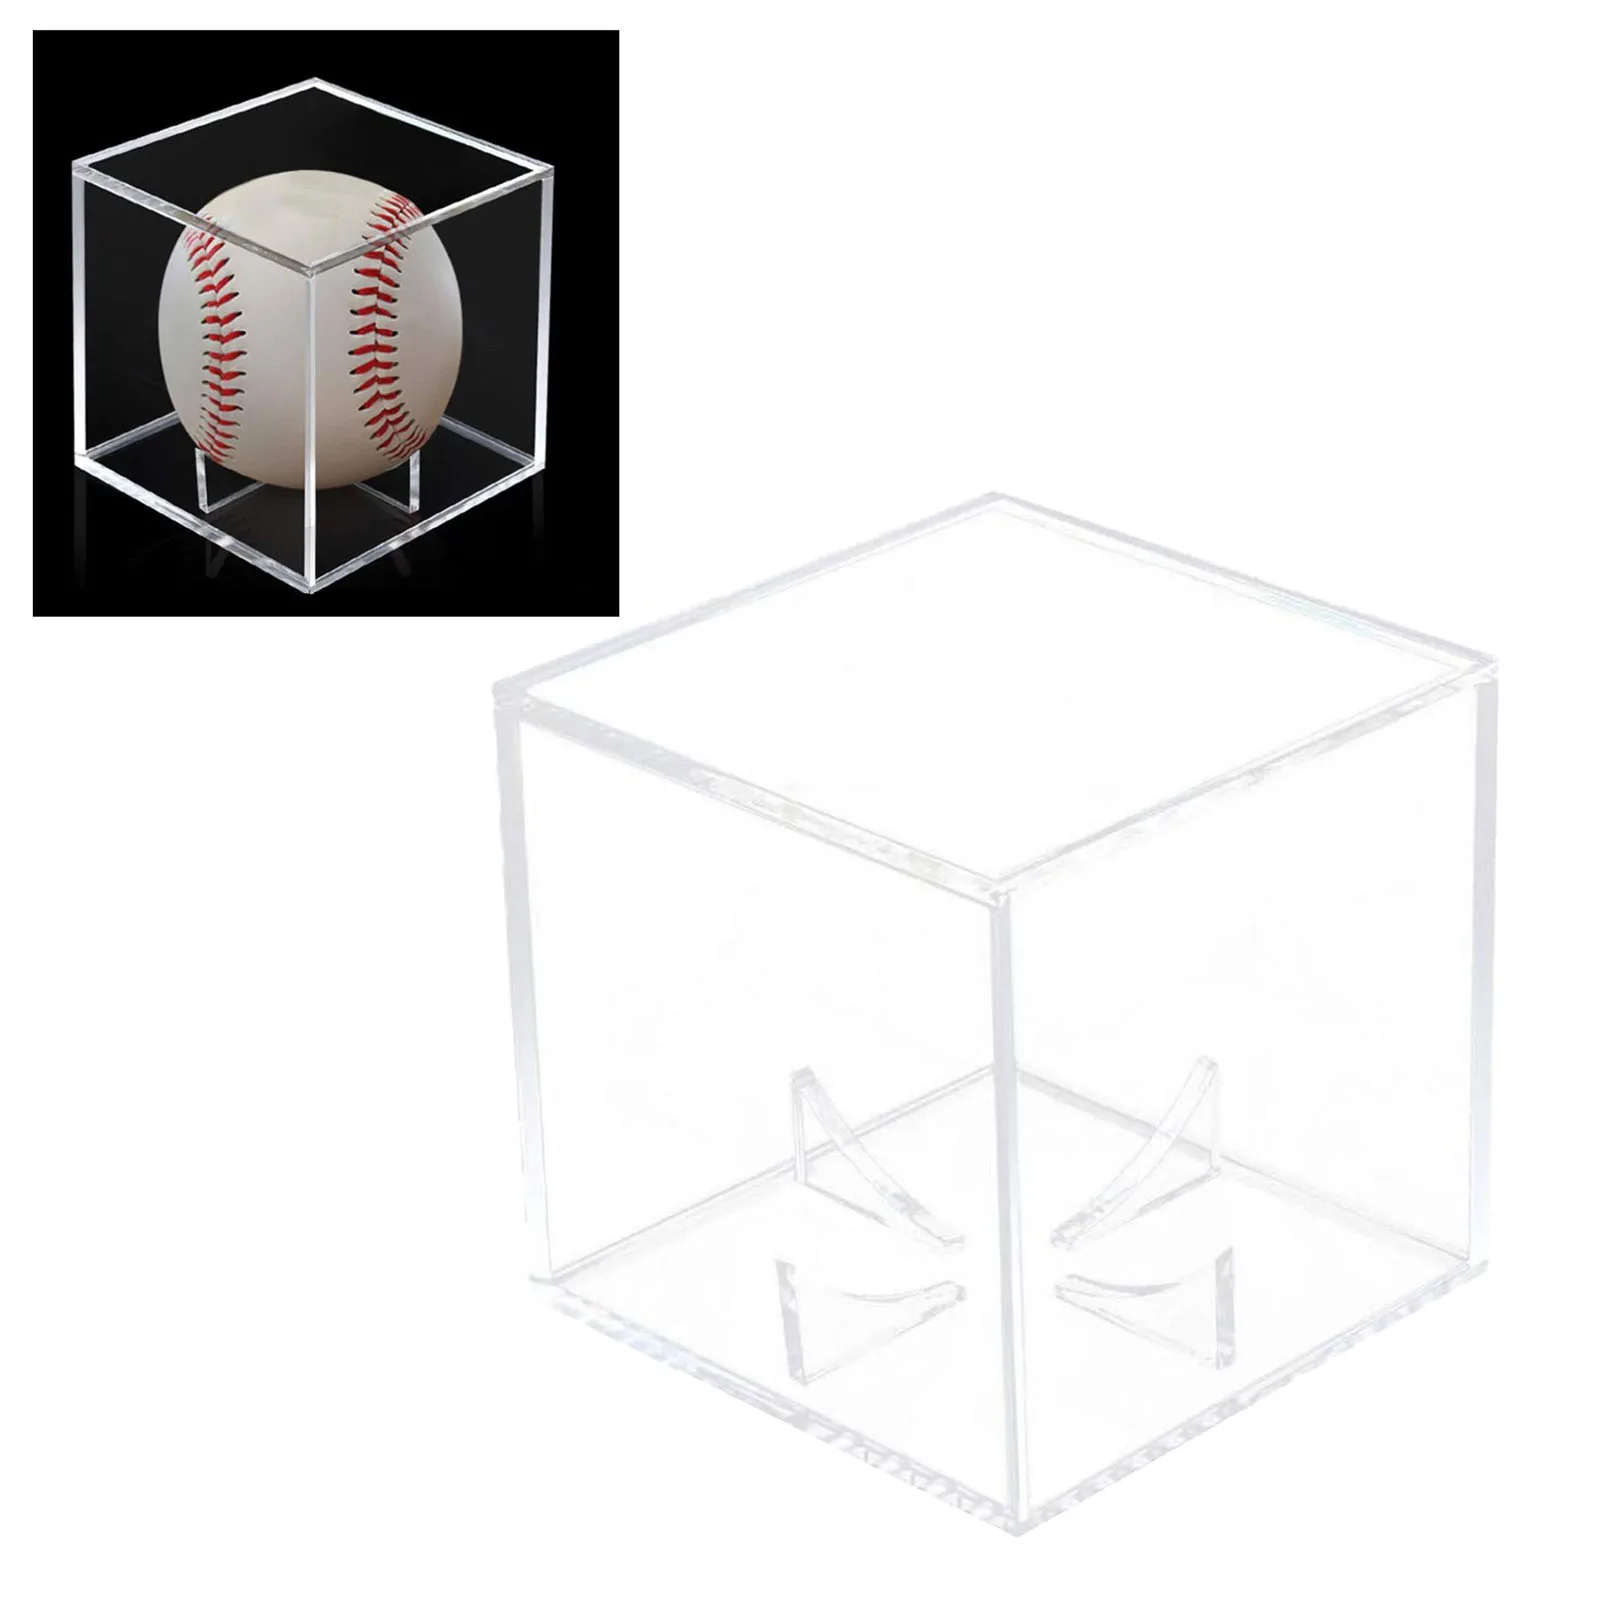 Acrylic 80mm Baseball Box Golf Ball Transparent Case Display Dustproof Souvenir Storage Box Protection Holder